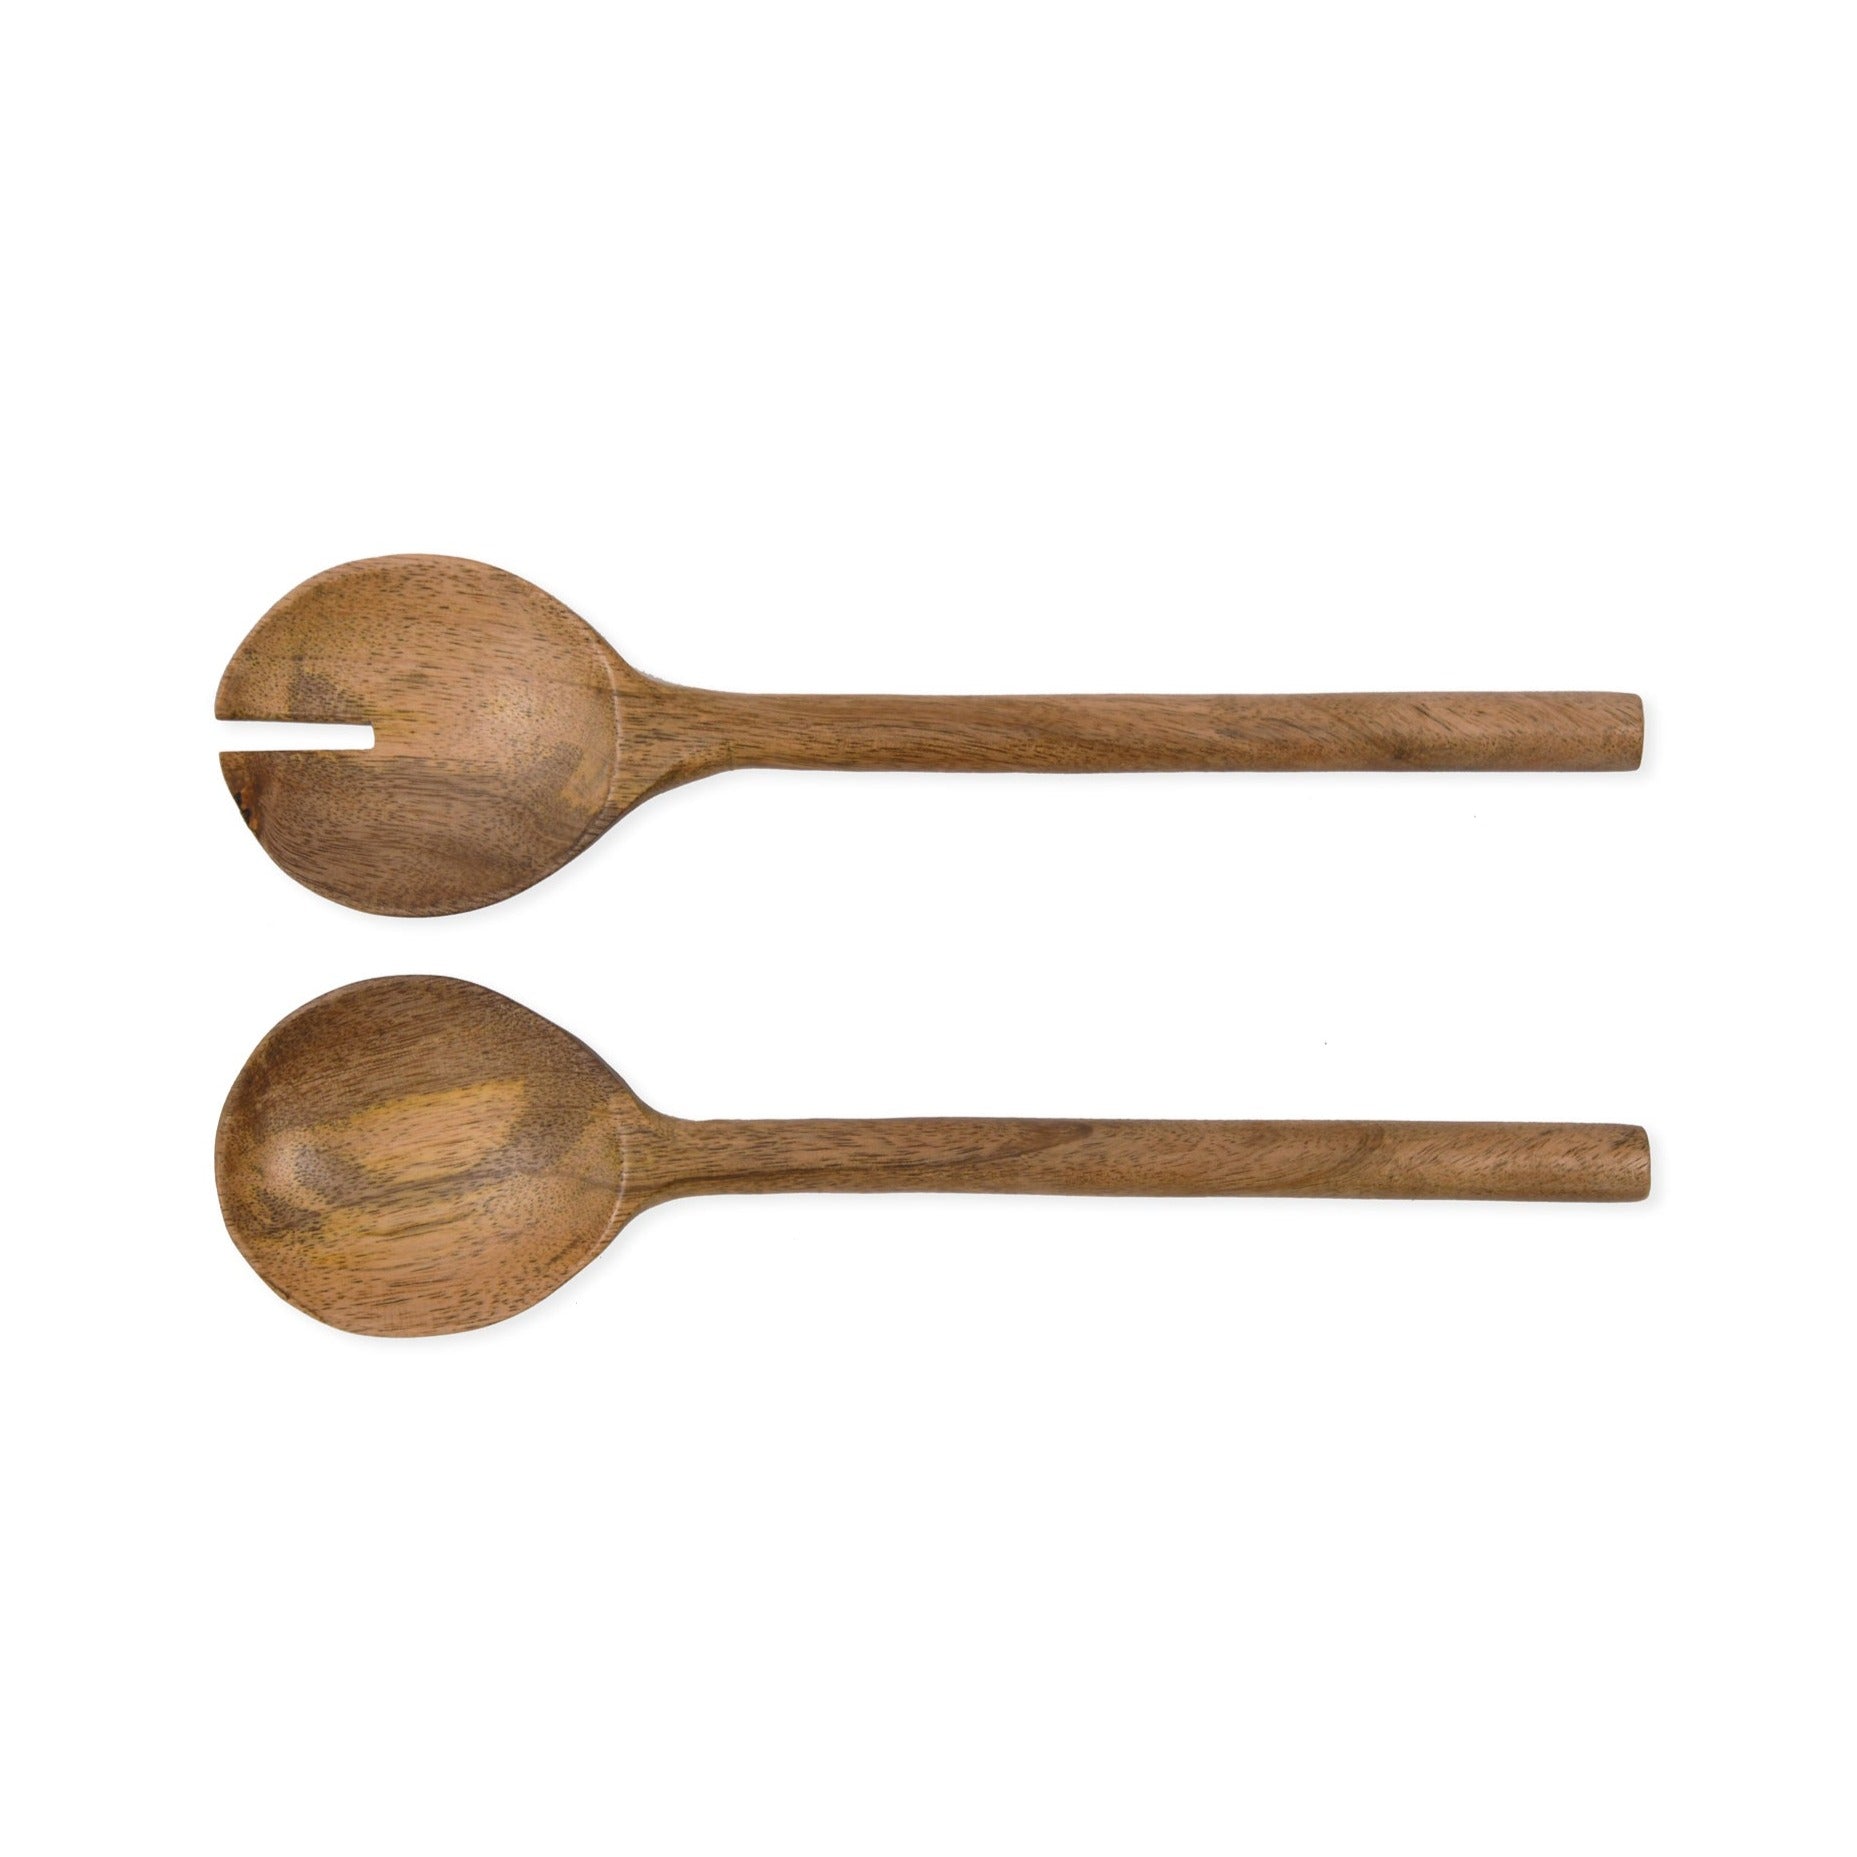 Wooden Serving Spoons